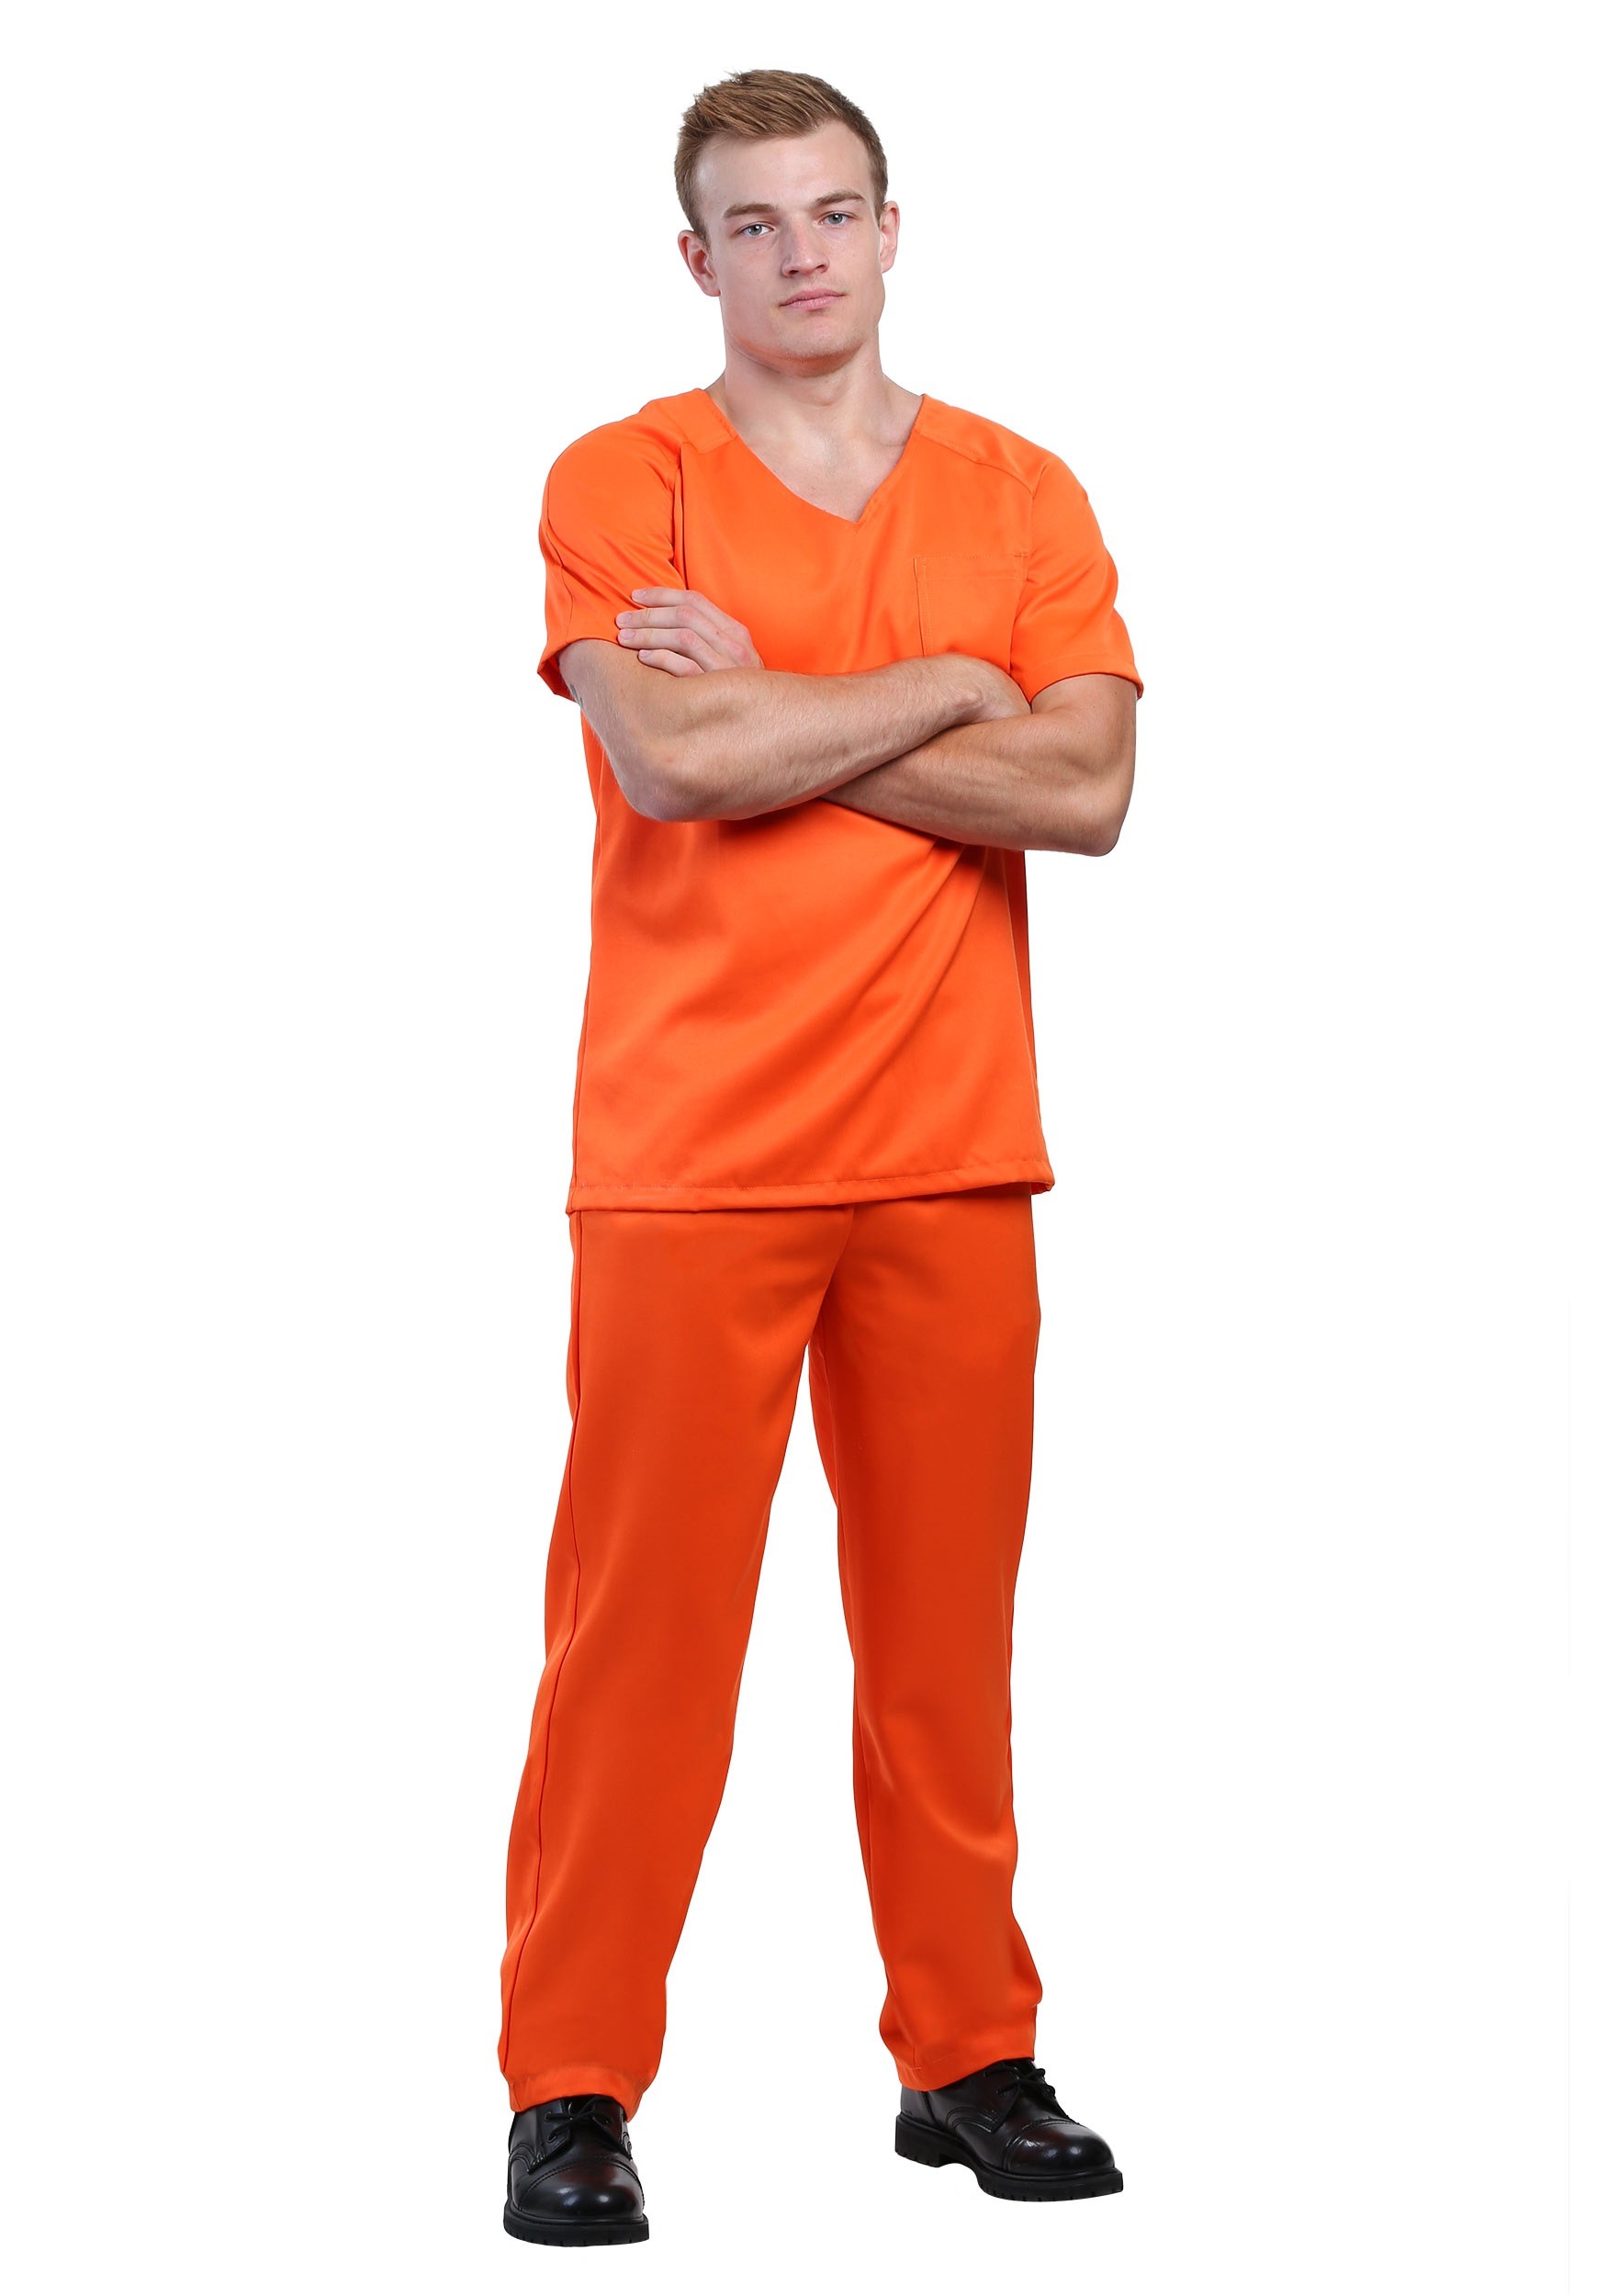 Mens Adult Orange Prisoner